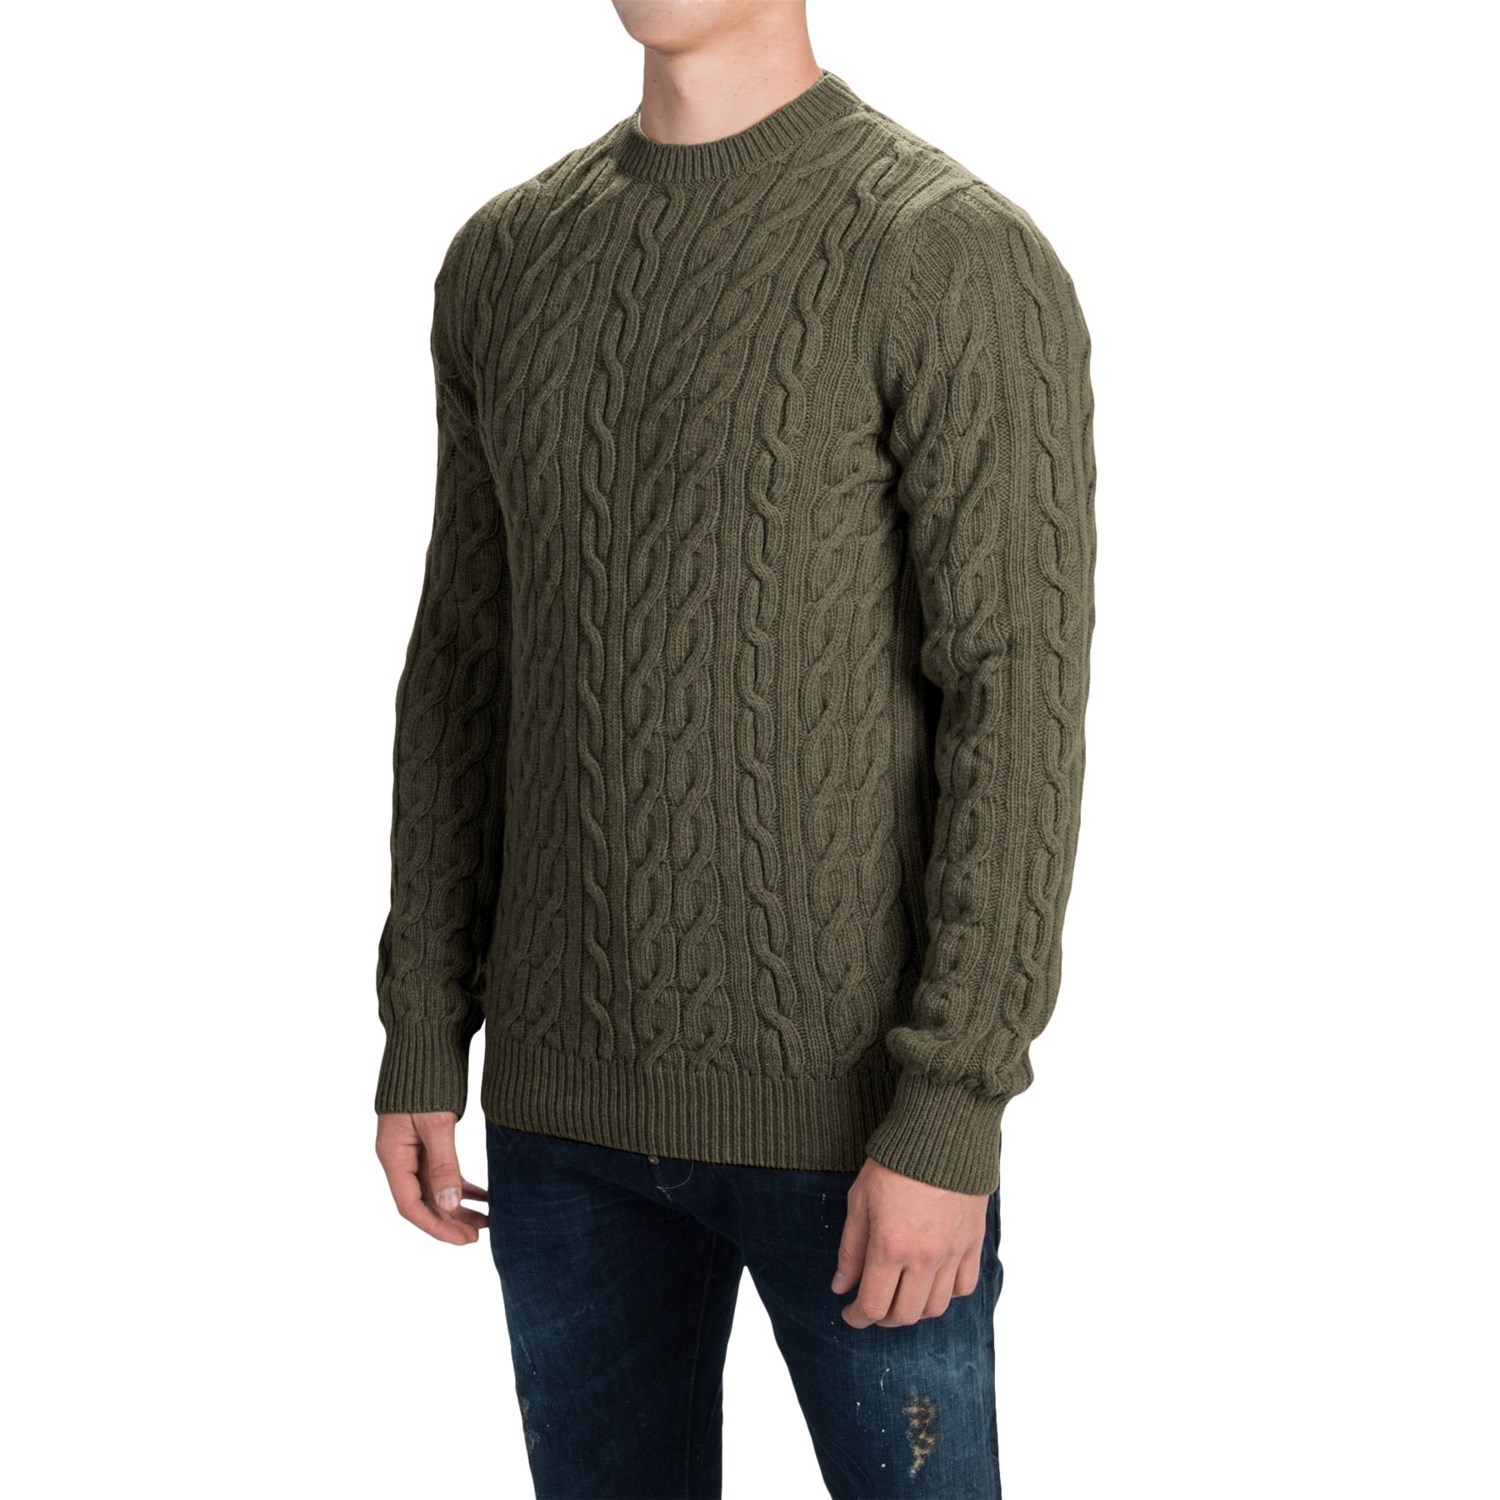 Barbour Pantone Wool Sweater (For Men) - Save 81%